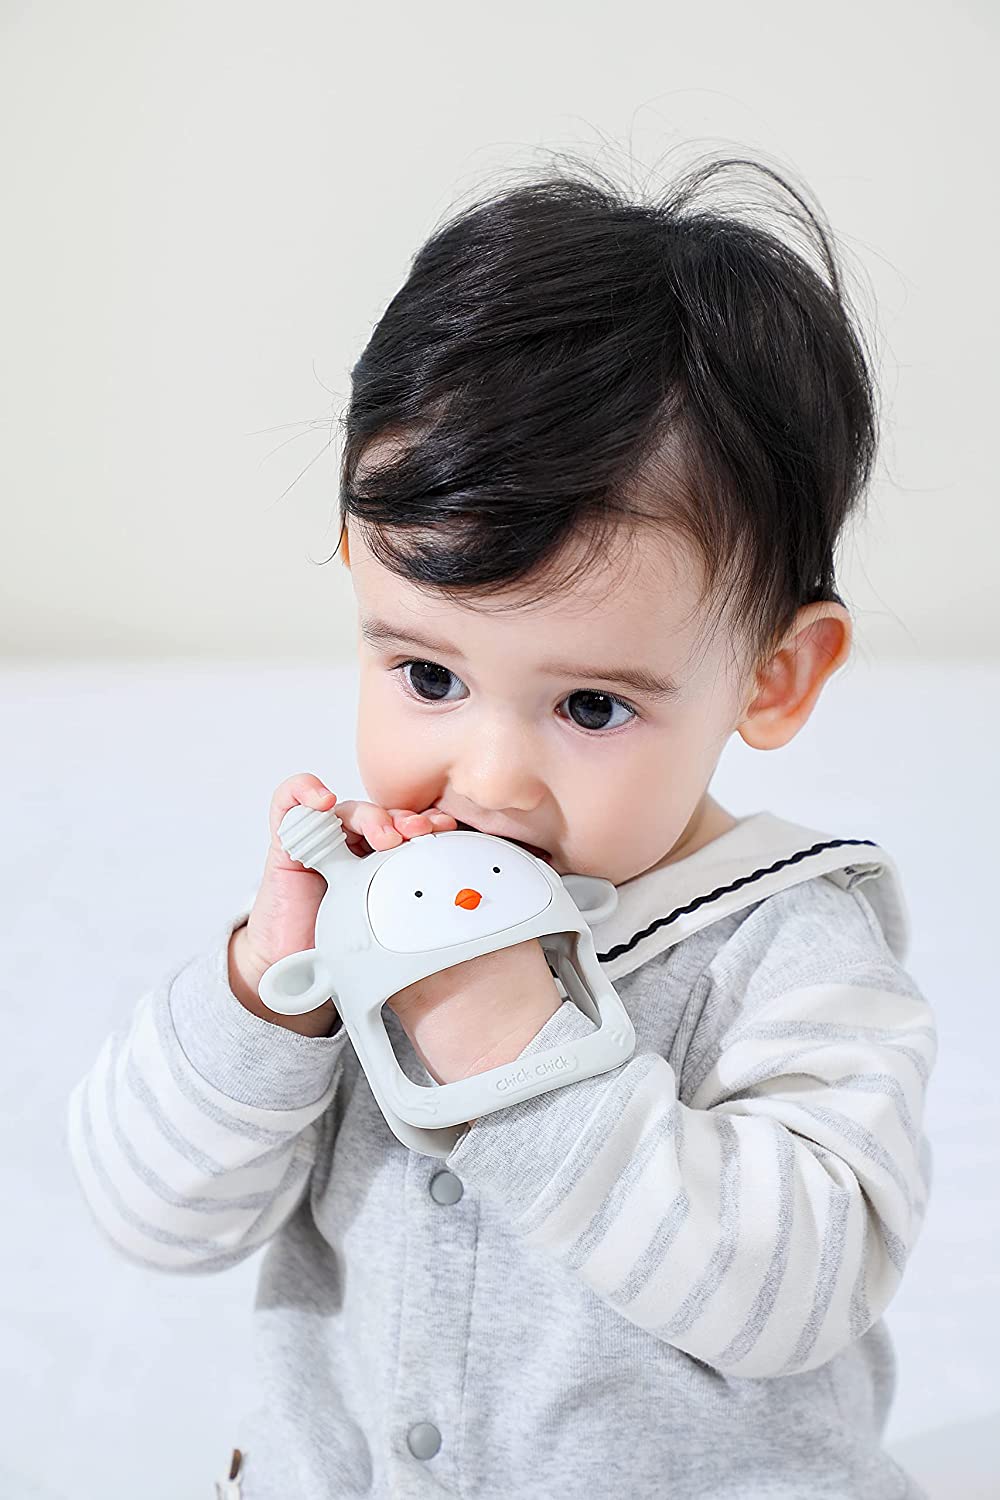 COZYPANDA 2 Pack Silicone Baby Teething Toy Never Drop Infants Toys Ba –  Cozypanda